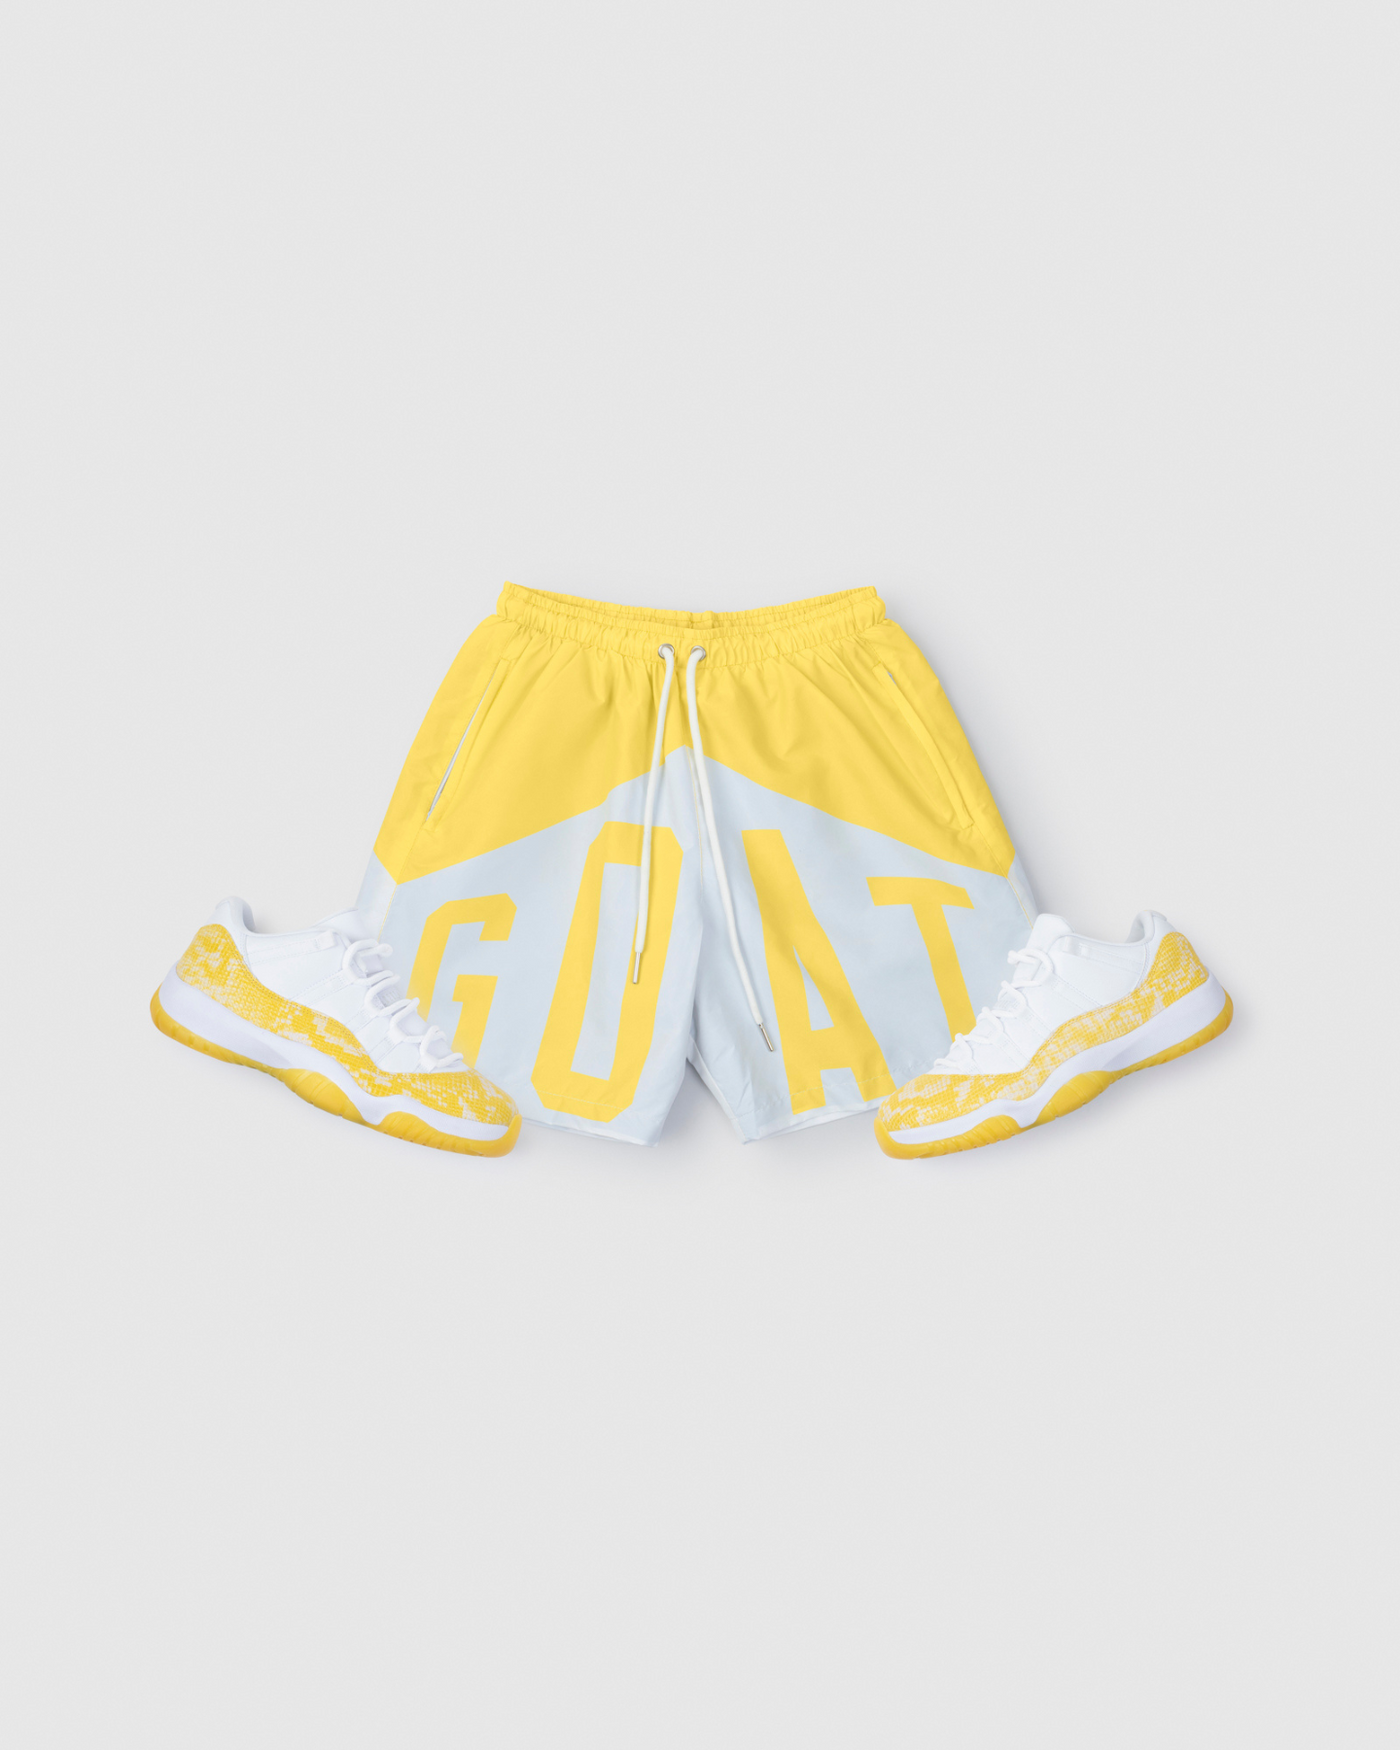 GOAT Big Arch Logo Shorts (Yellow Snakeskin)